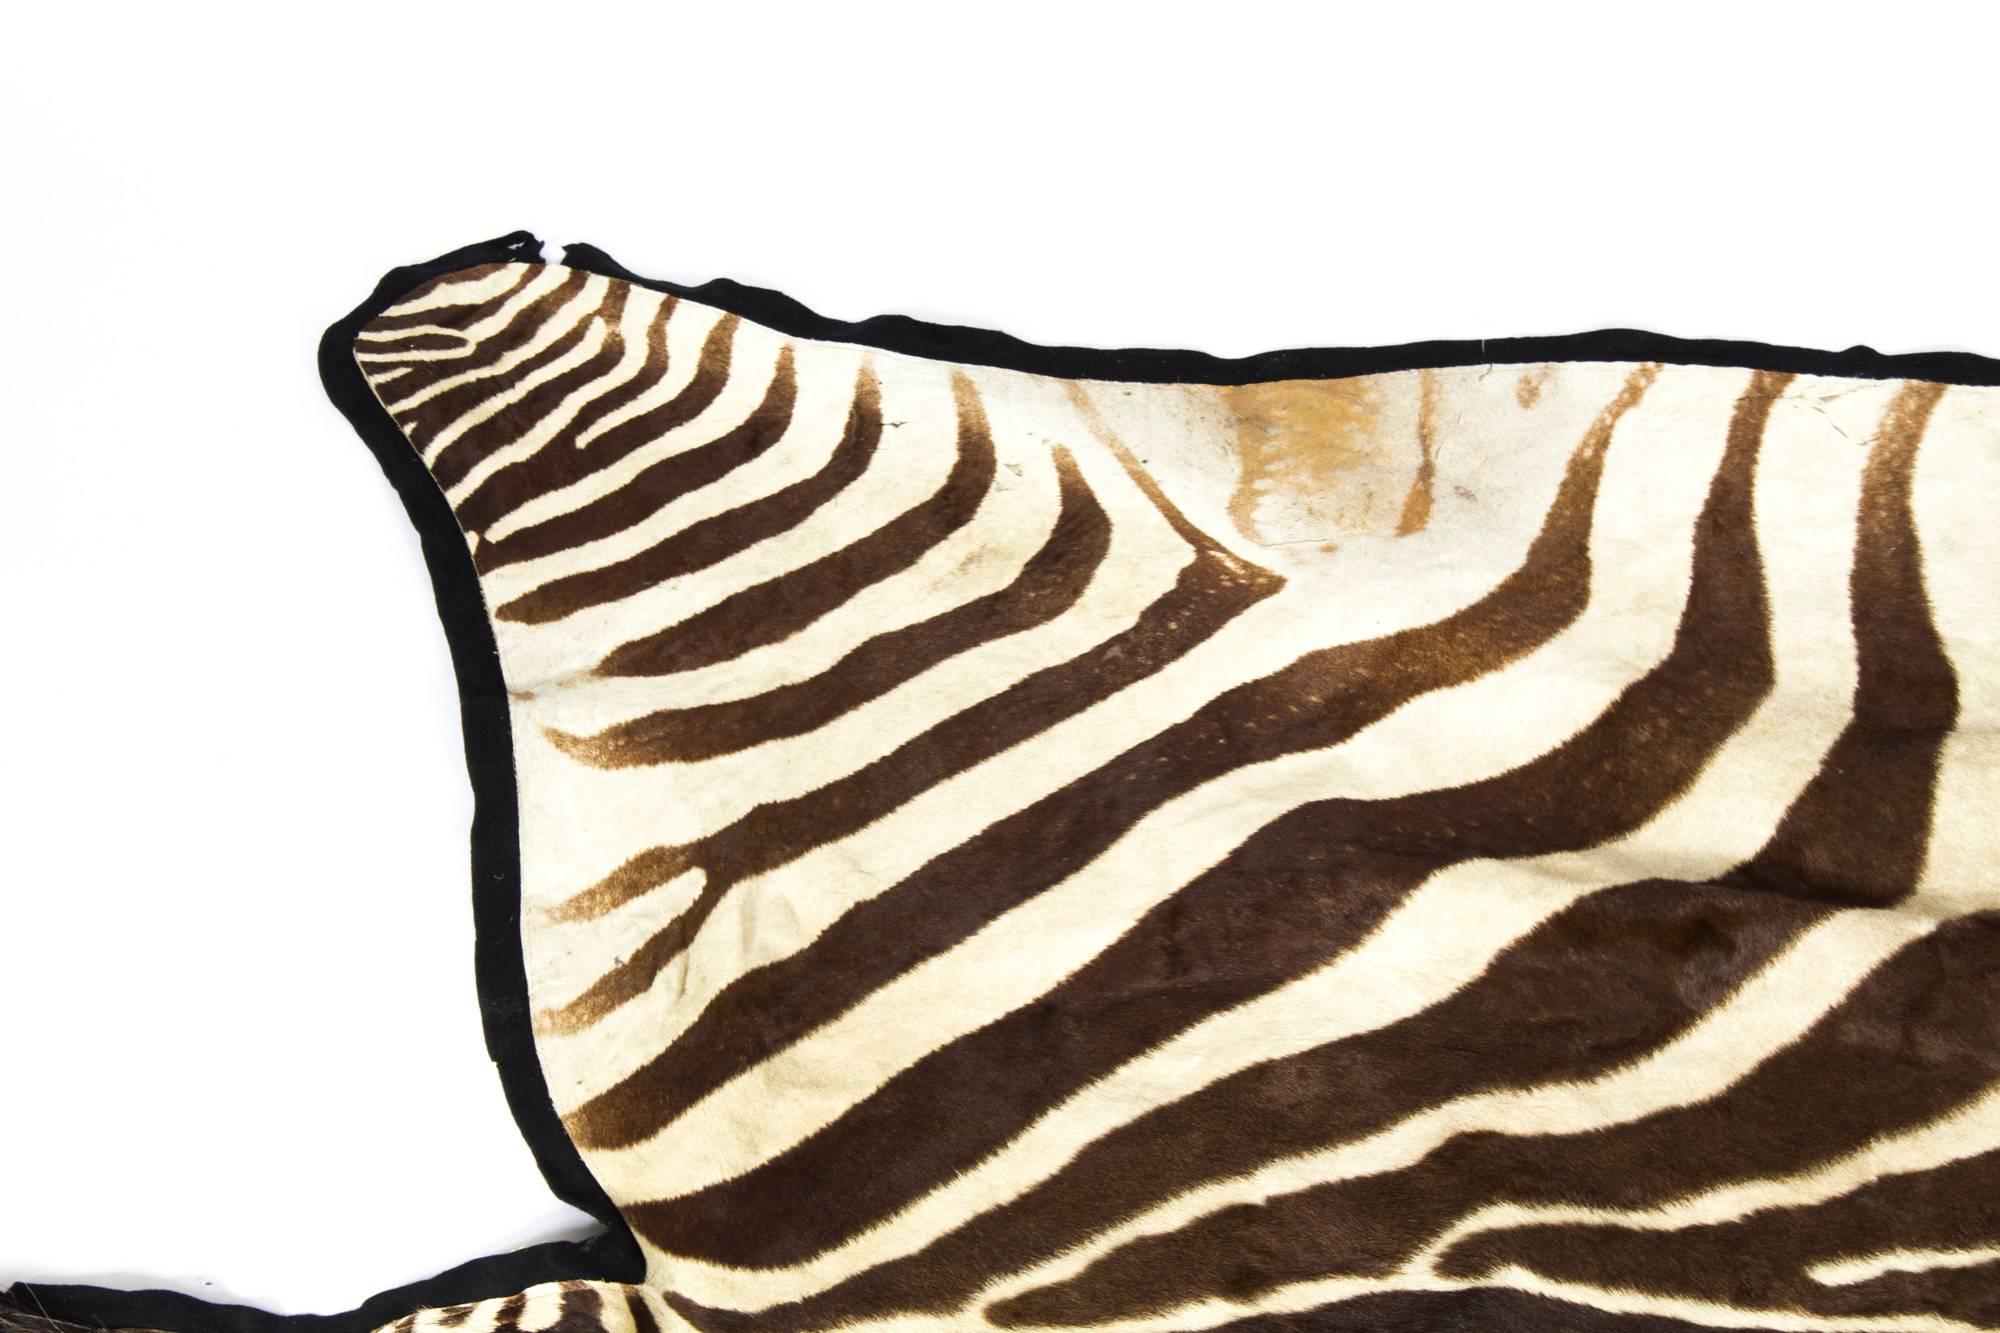 Late 20th Century Vintage Taxidermy Zebra Skin Rug with Felt Backing, circa 1970